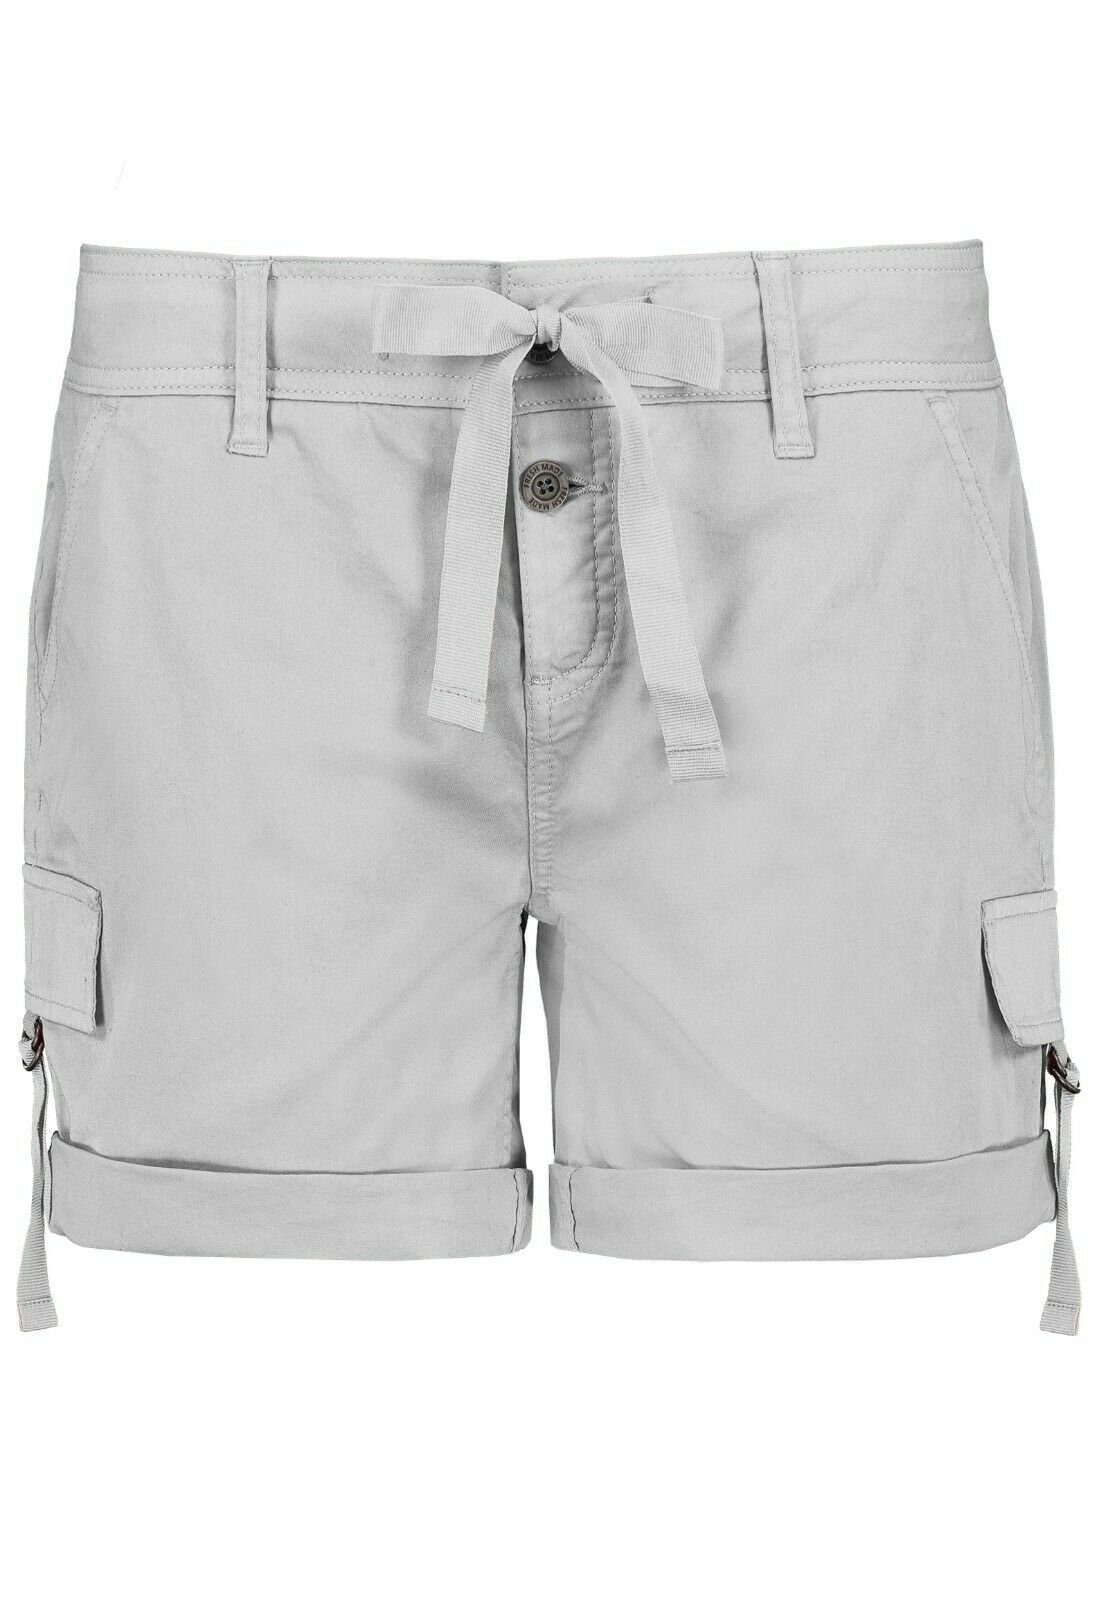 Kurze Grau Fresh Short Bermuda Sommer Hotpants Hose Made Bermudas Shorts